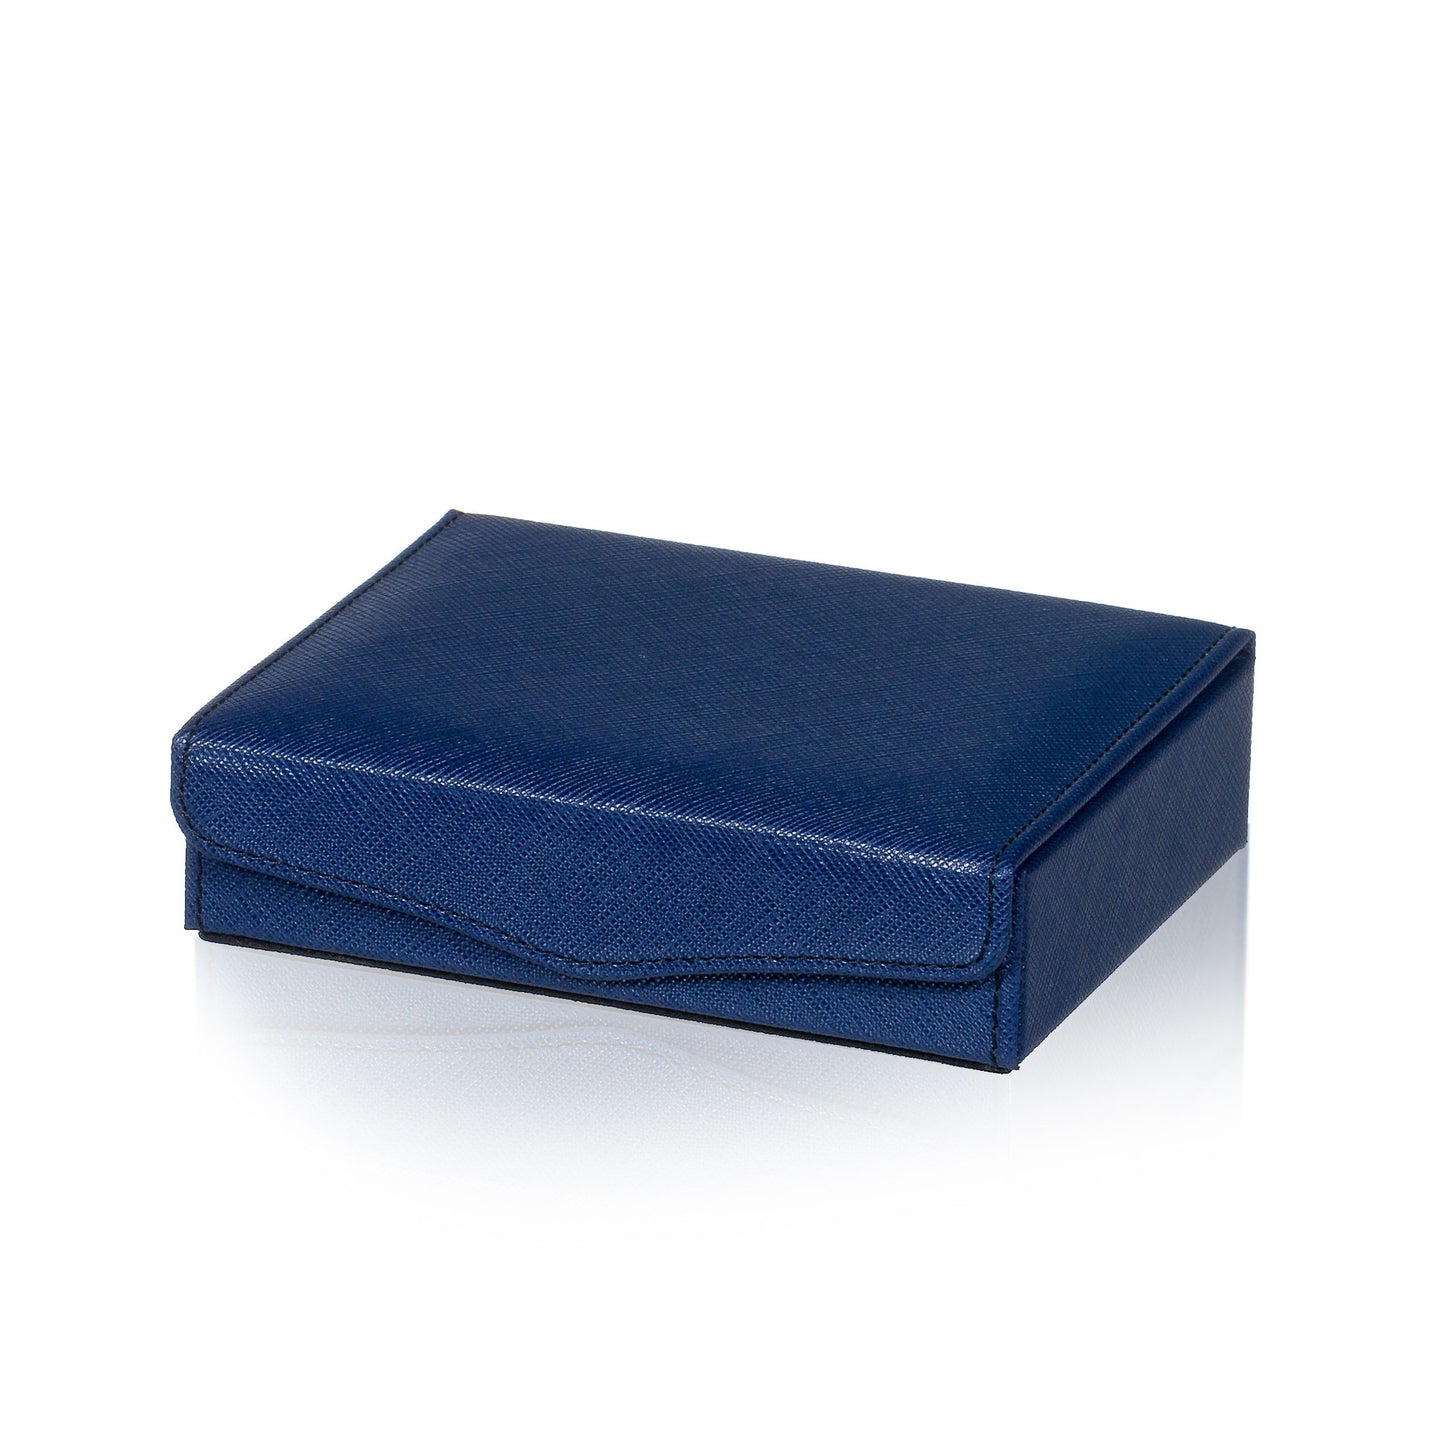 Textured Blue Leather Jewelry & Cufflink Box